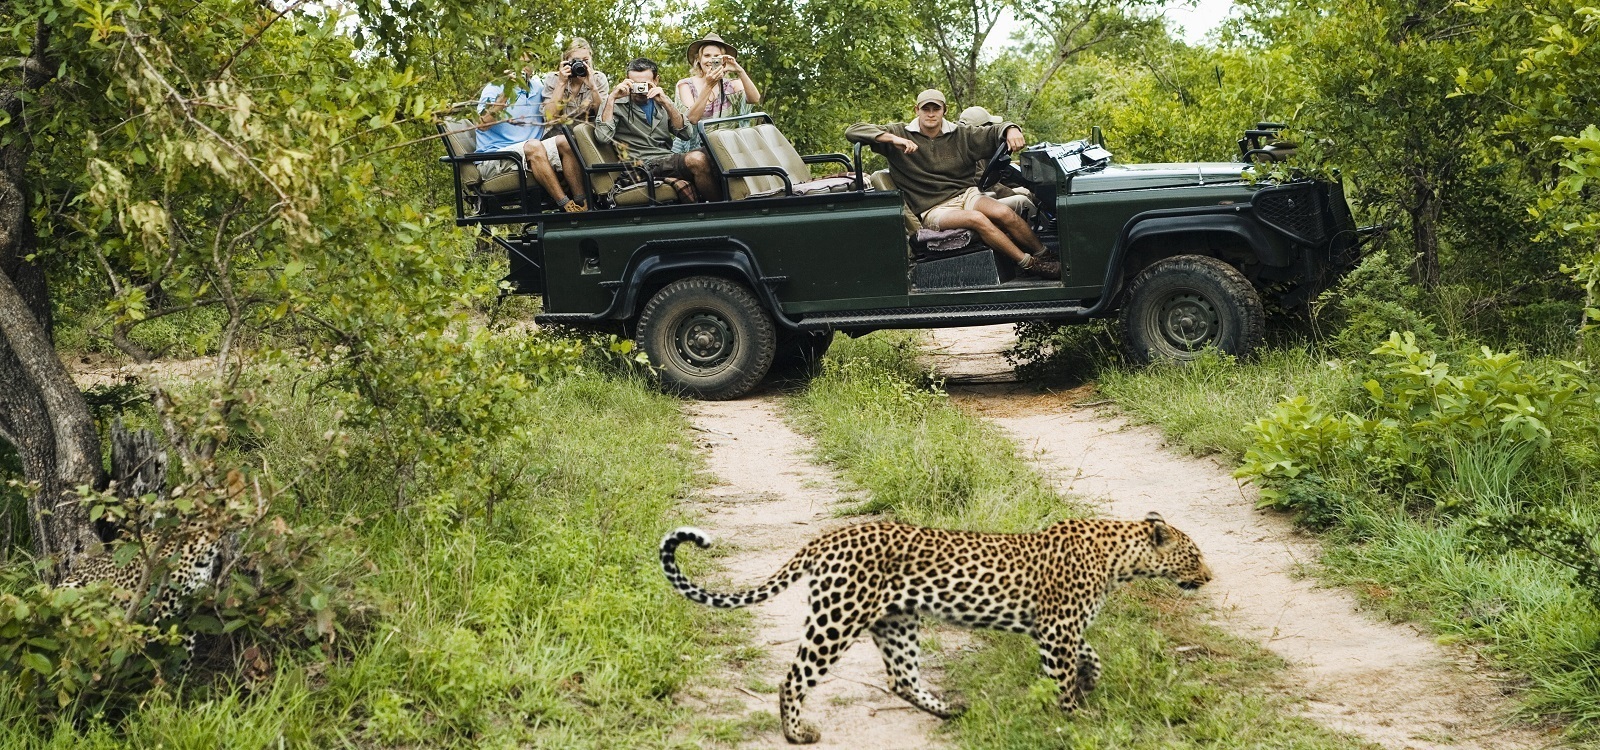 south african safari adventure saga